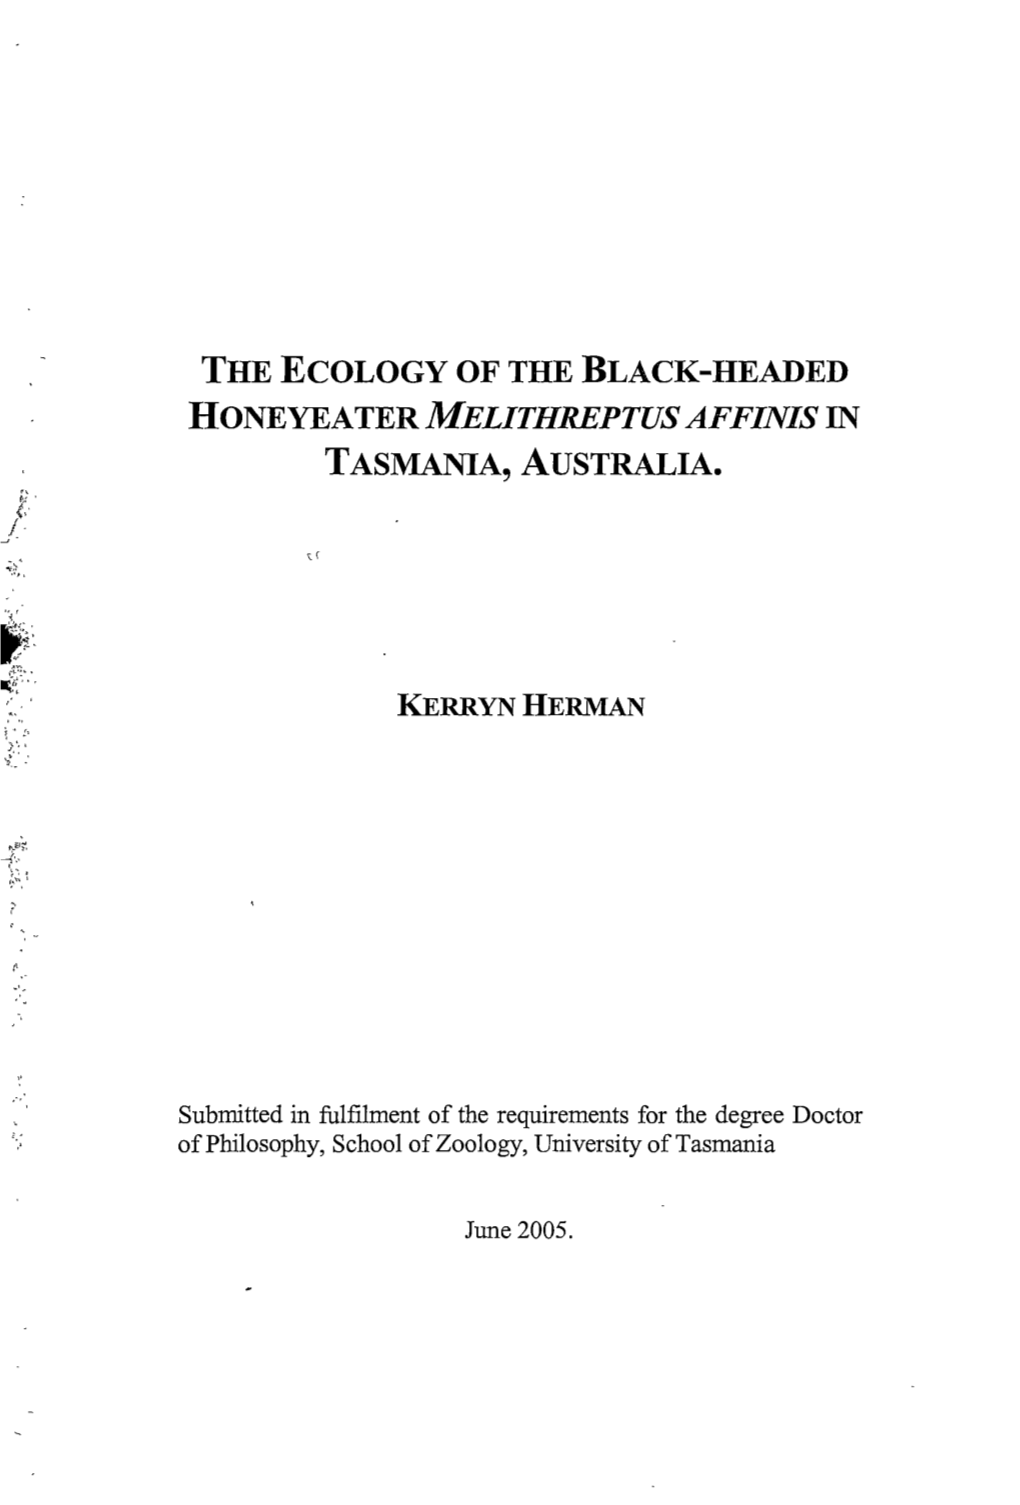 The Ecology of the Black-Headed Honeyeater Melithreptus Affinis in Tasmania, Australia